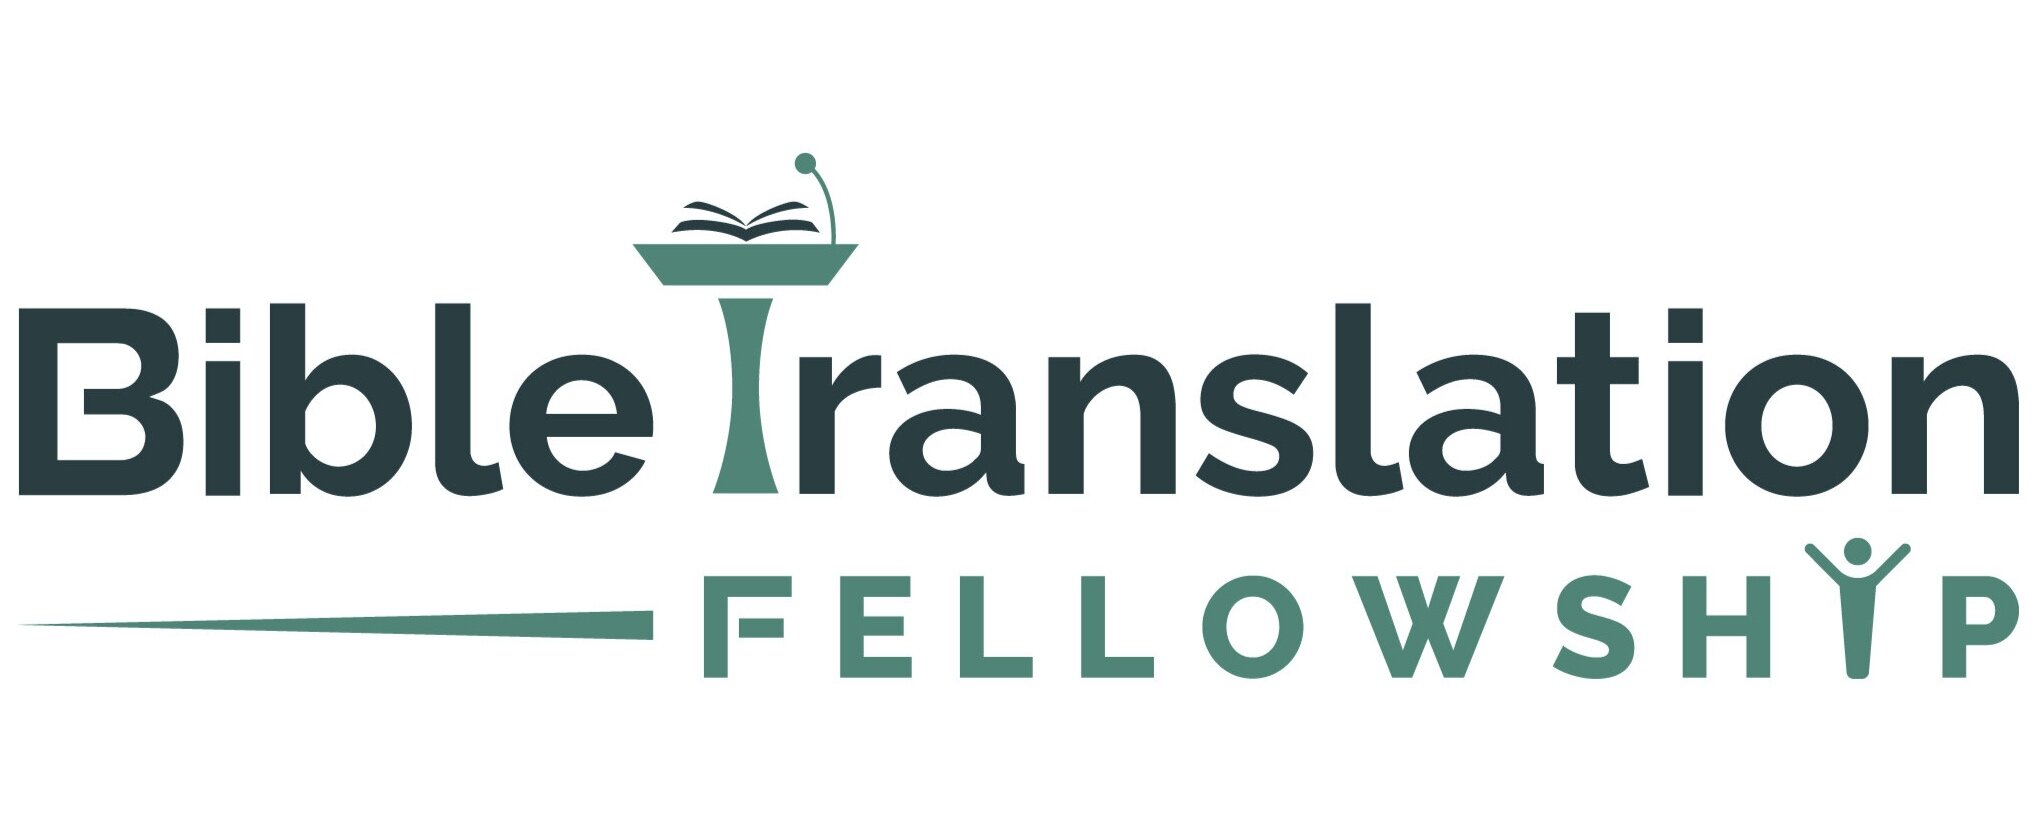 Bible Translation Fellowship